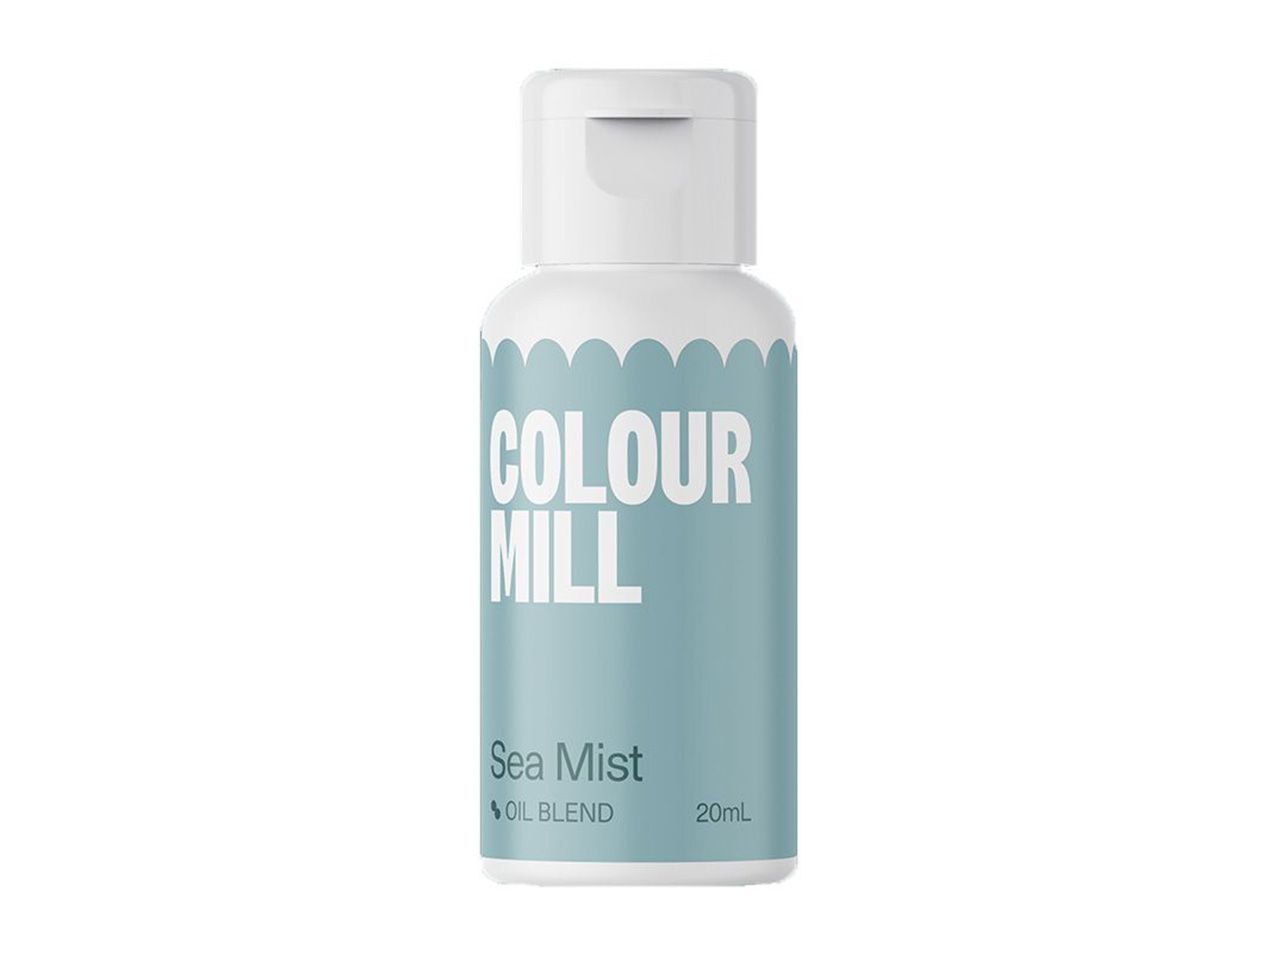 Lebensmittelfarbe öllöslich Sea Mist 20ml von Colour Mill